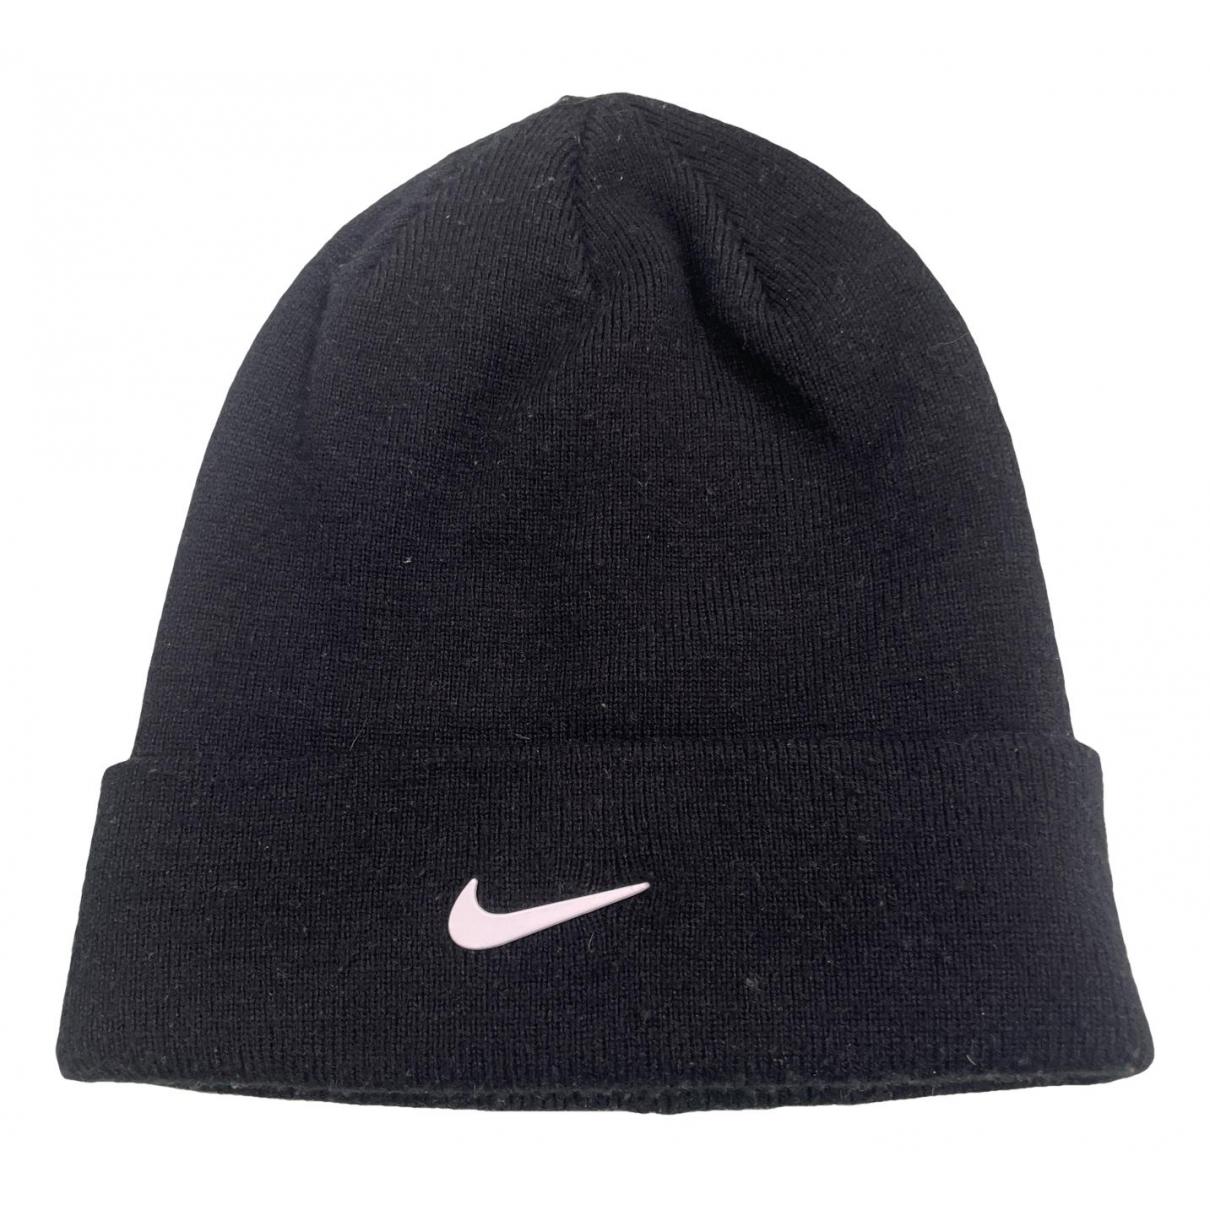 Chapeau / bonnet Nike Noir taille S International en Polyester - 38118663